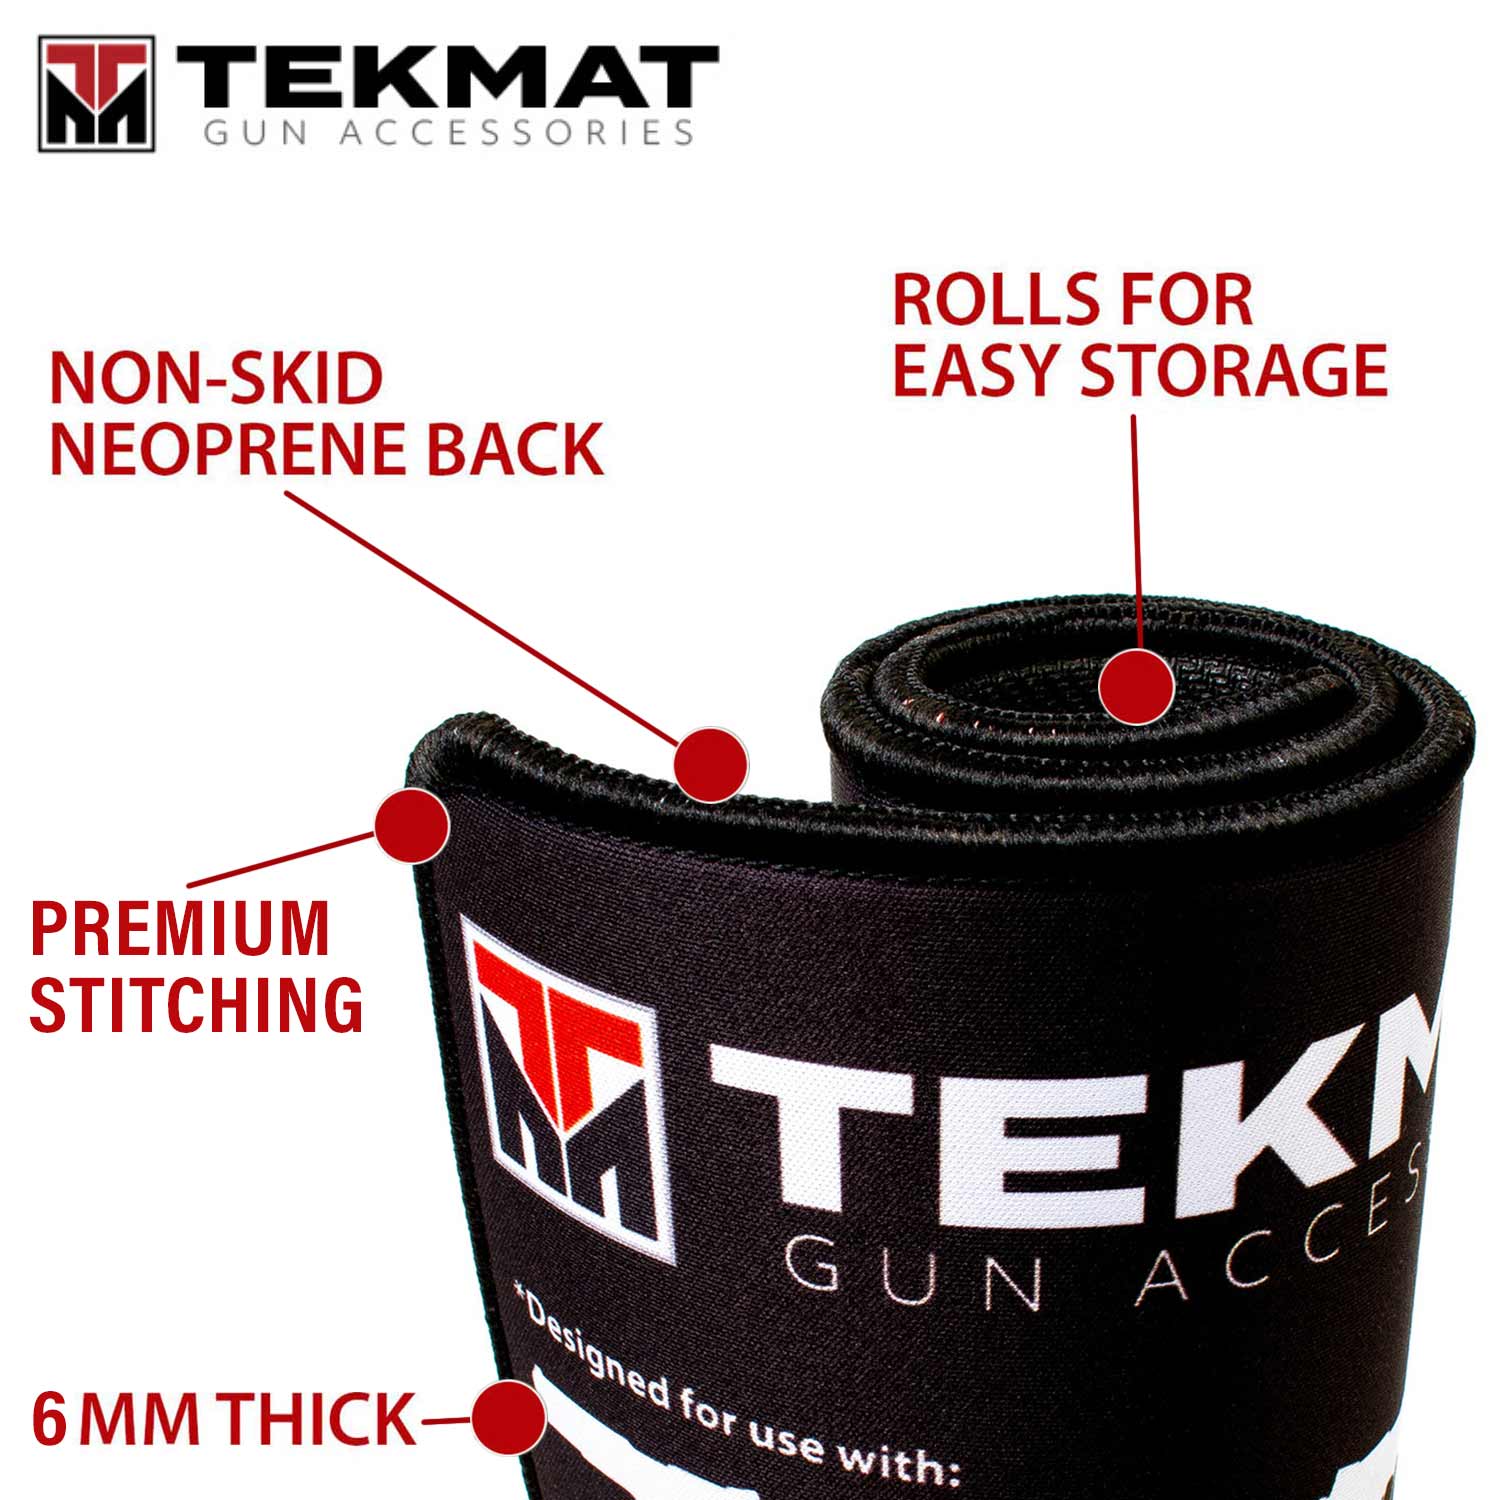 Tekmat Cutaway Ultra Premium Rifle Cleaning Mat TekMat created the